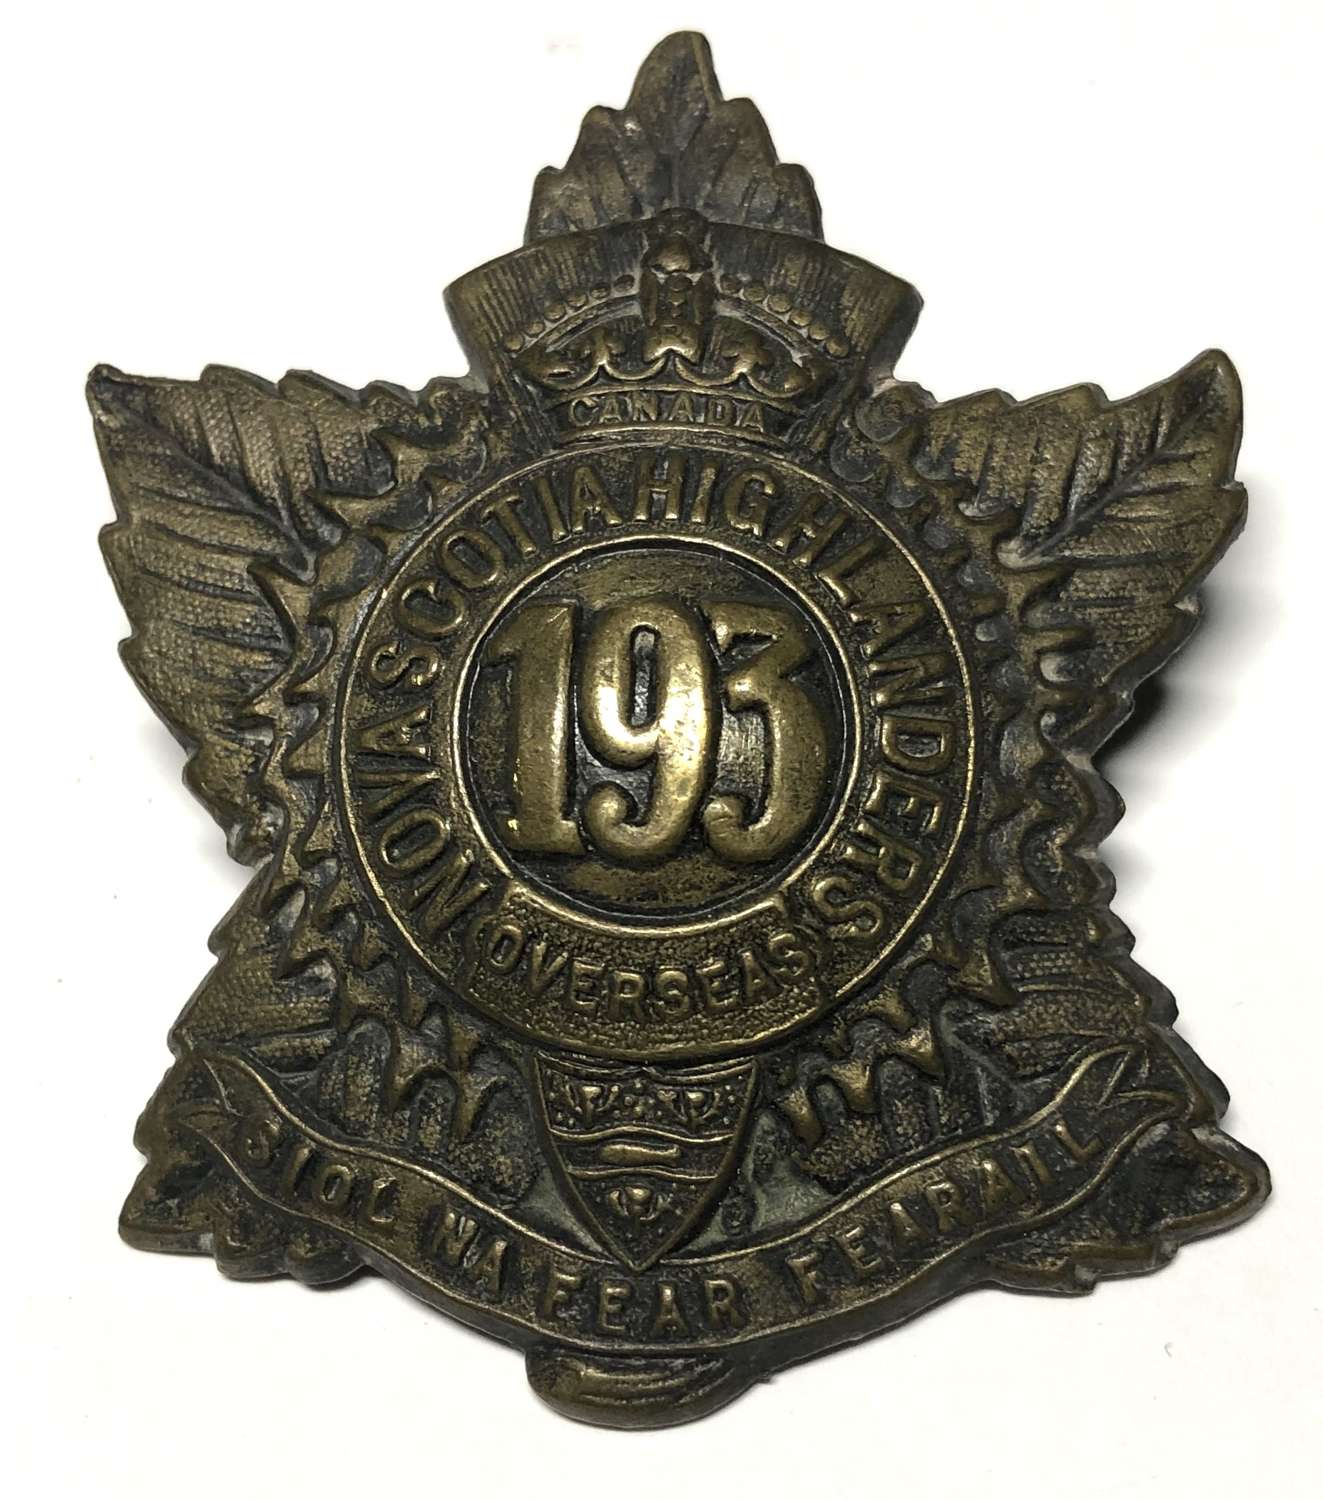 Canadian 193rd Bn. Nova Scotia Highlanders CEF WW1 glengarry badge